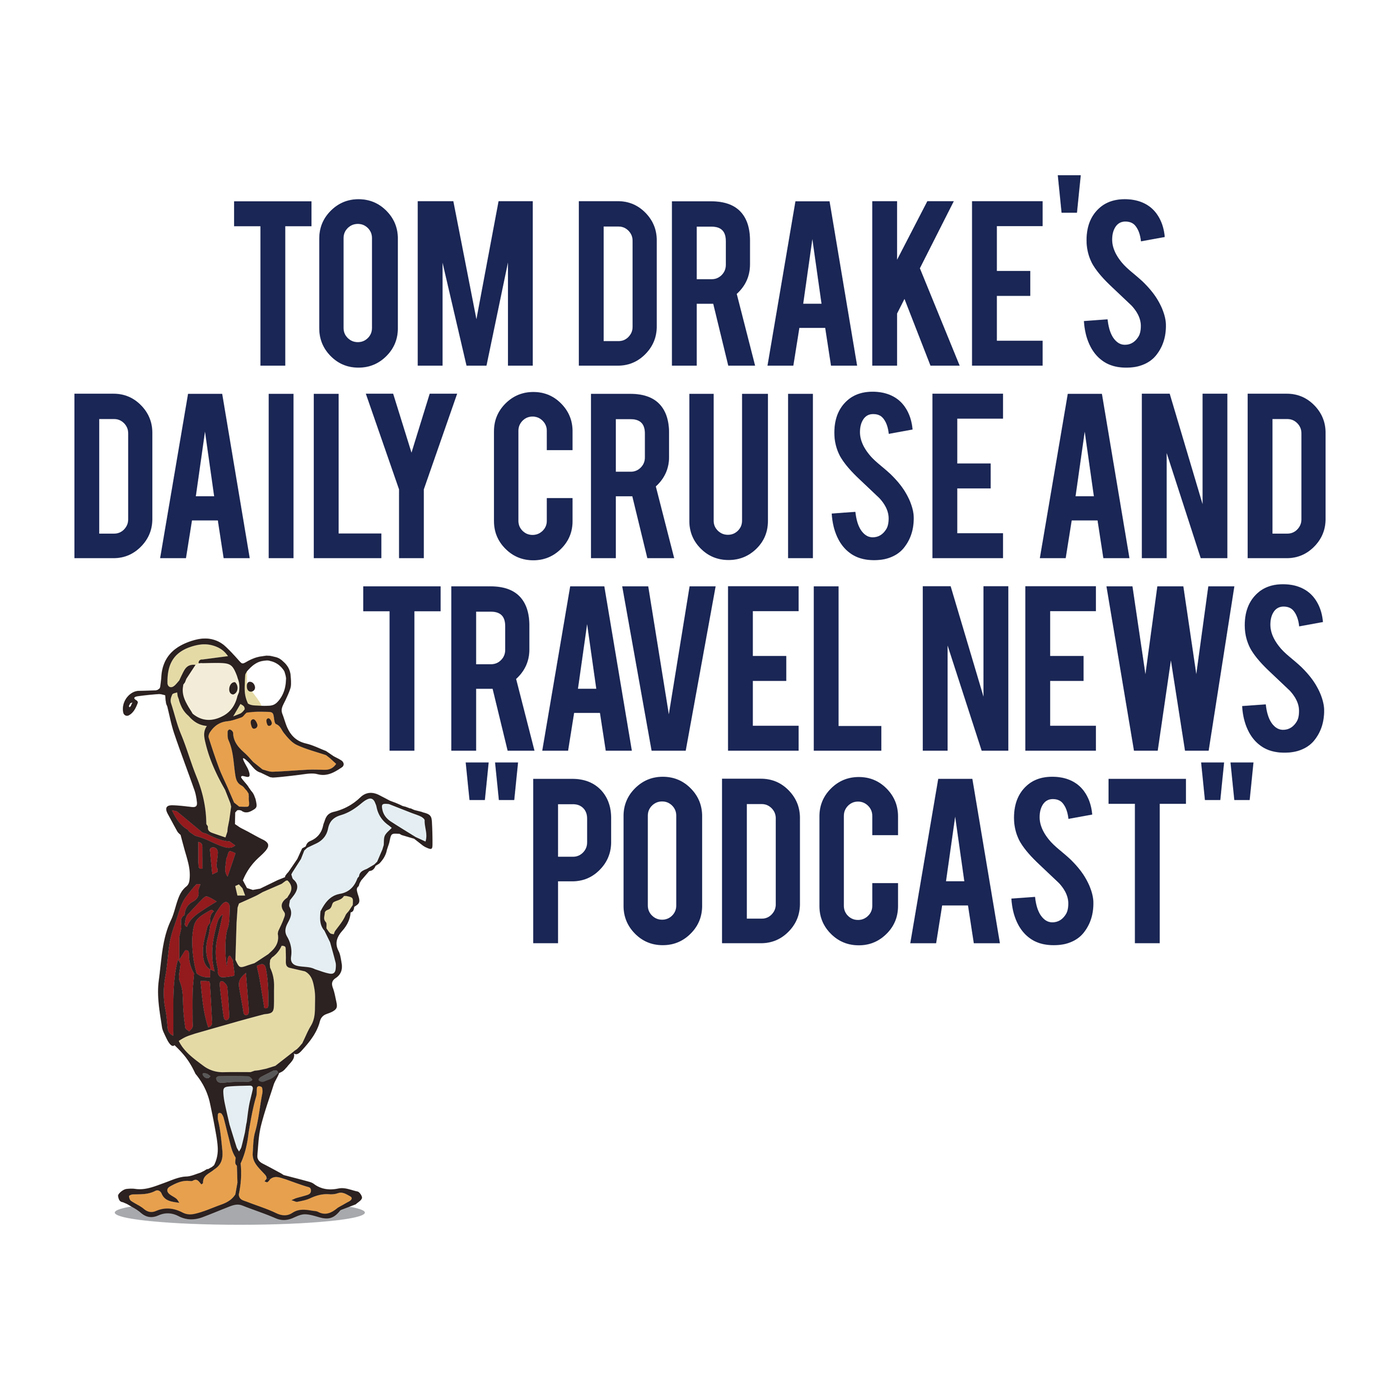 January 19th Podcast. New York City Mayor Wants 2 Billion to Charter Cruise Ships!